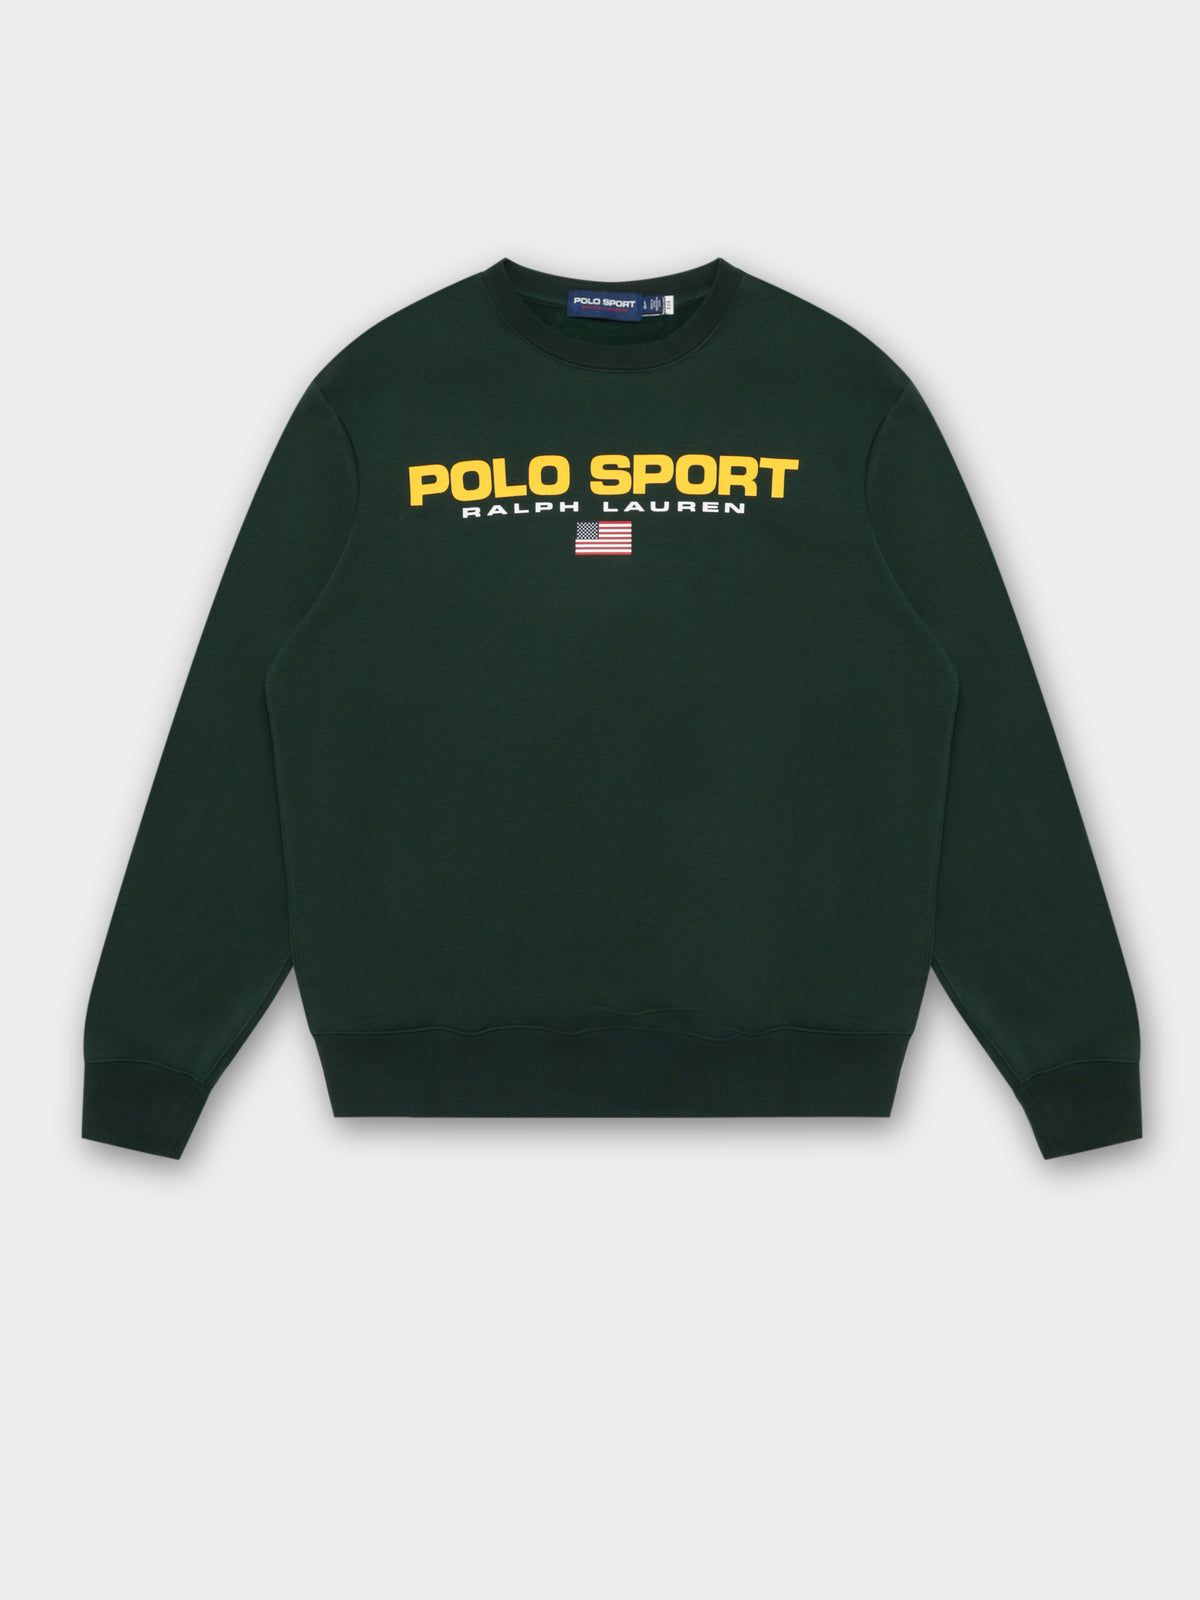 Polo Sport Fleece in College Green